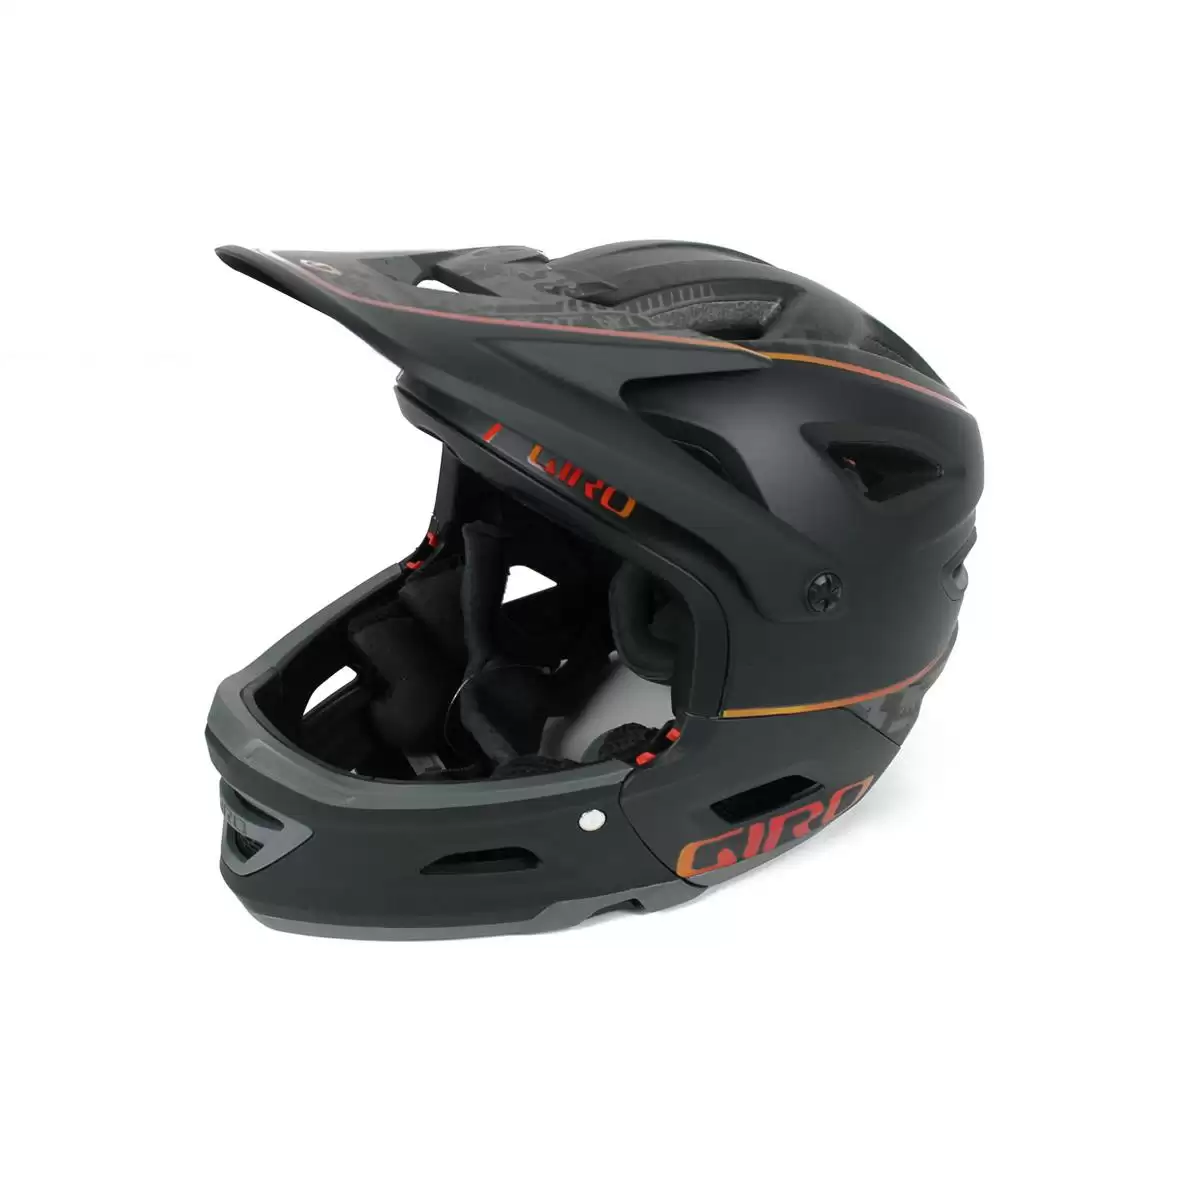 Helmet Switchblade Mips black size S (51-55cm) - image